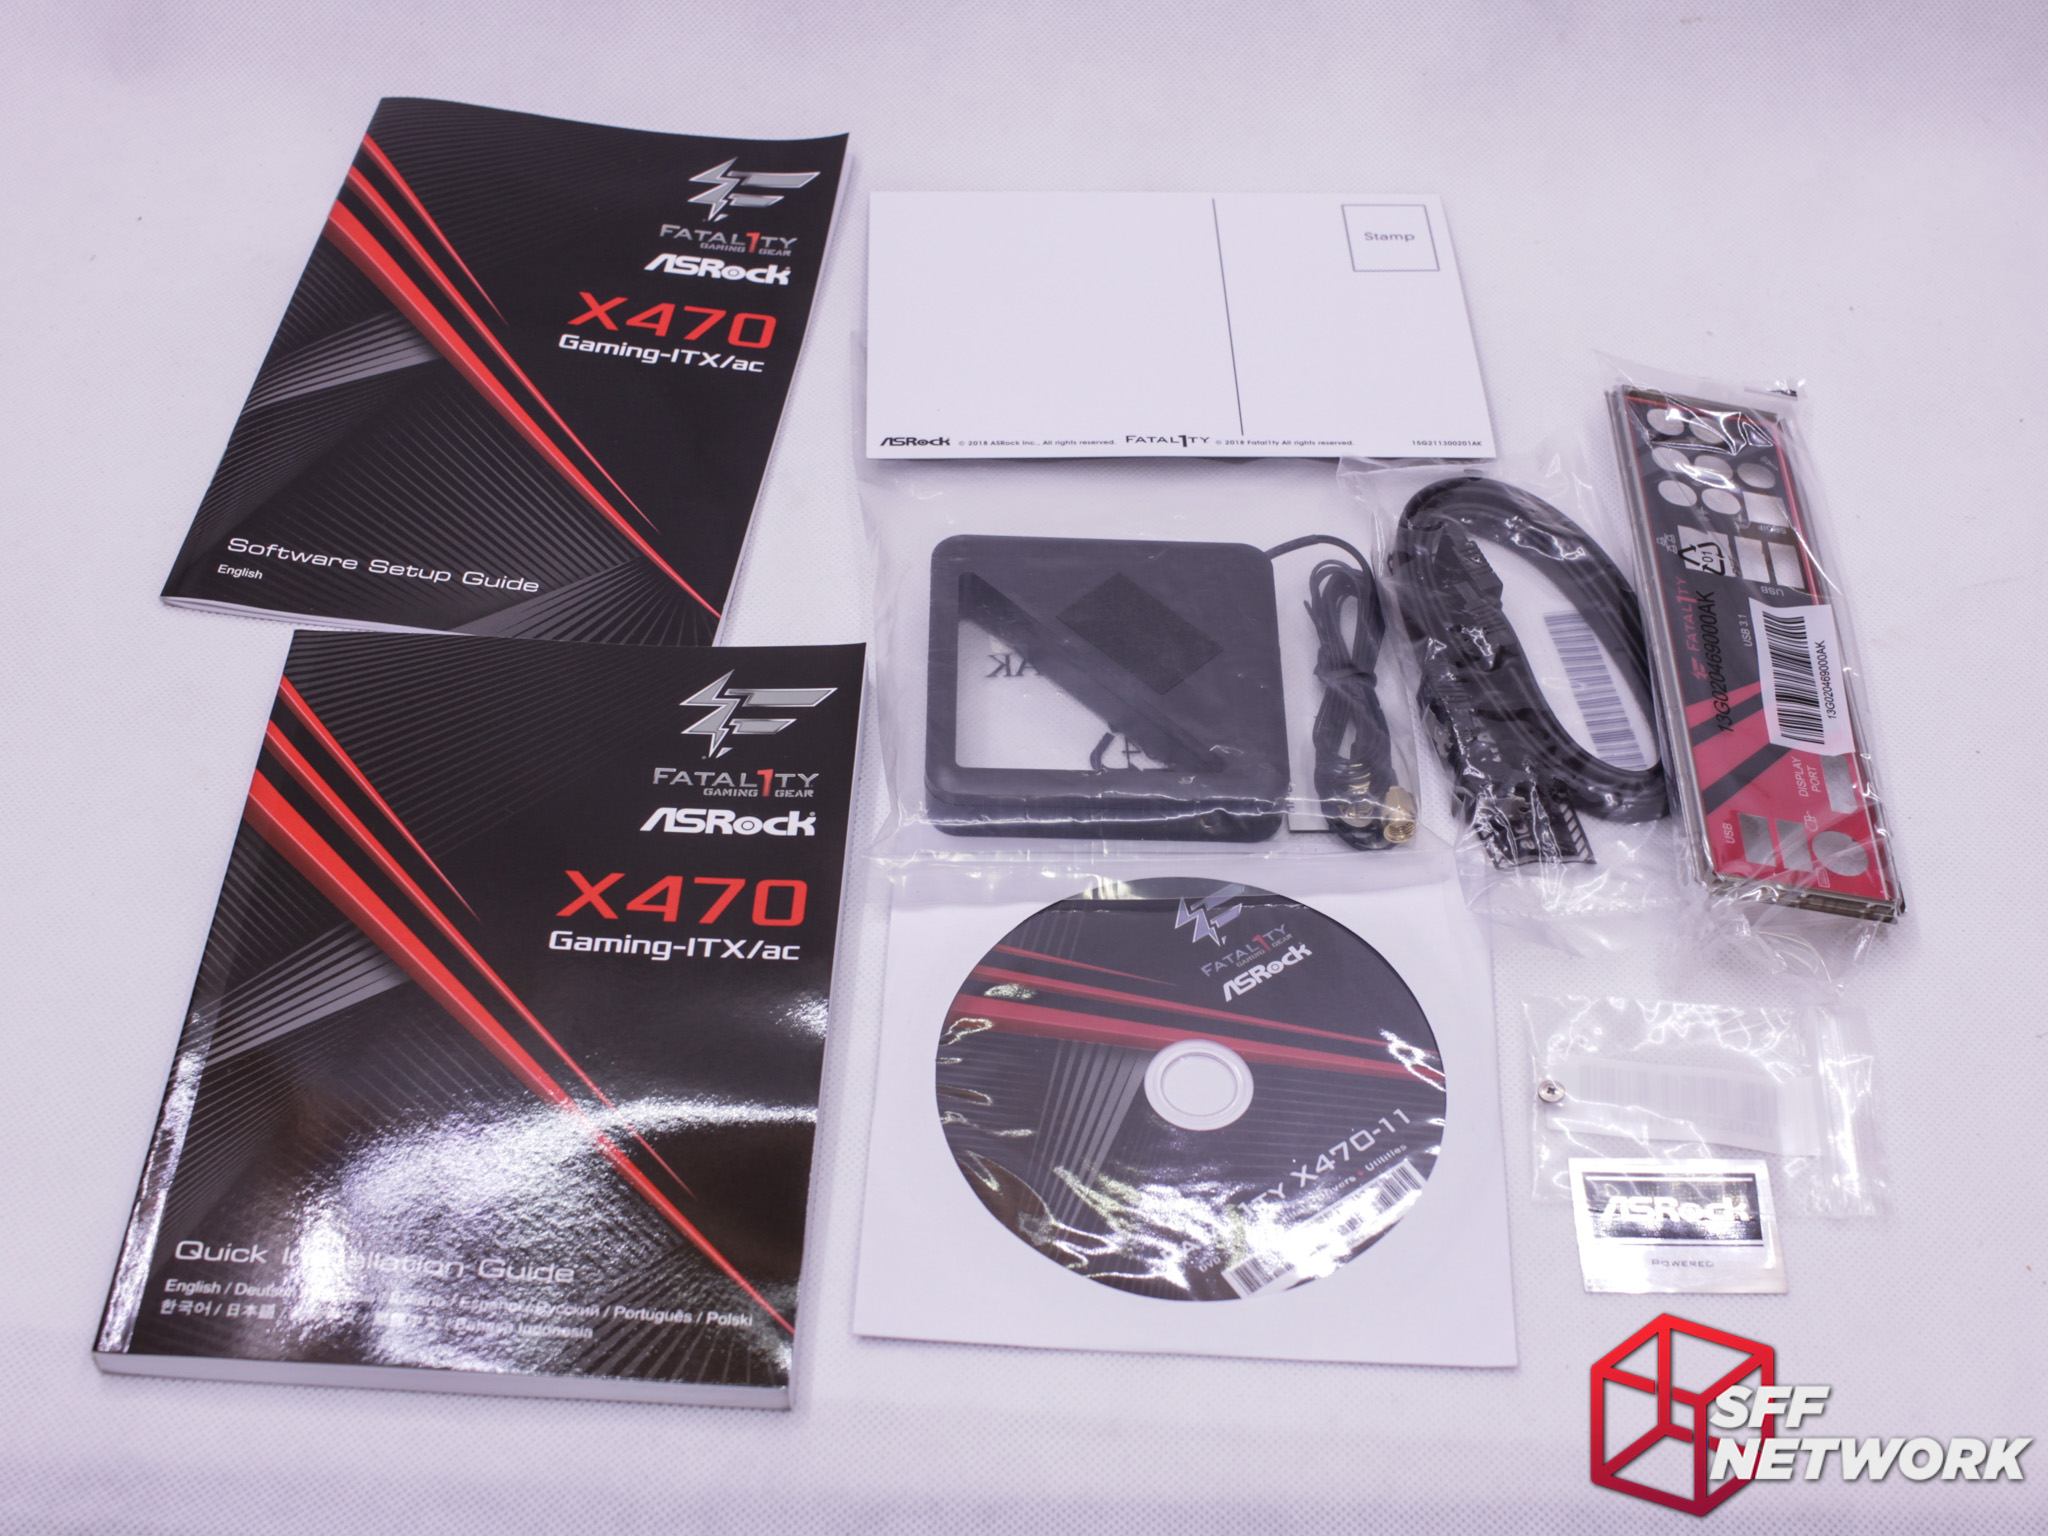 ASRock > Fatal1ty X470 Gaming-ITX/ac